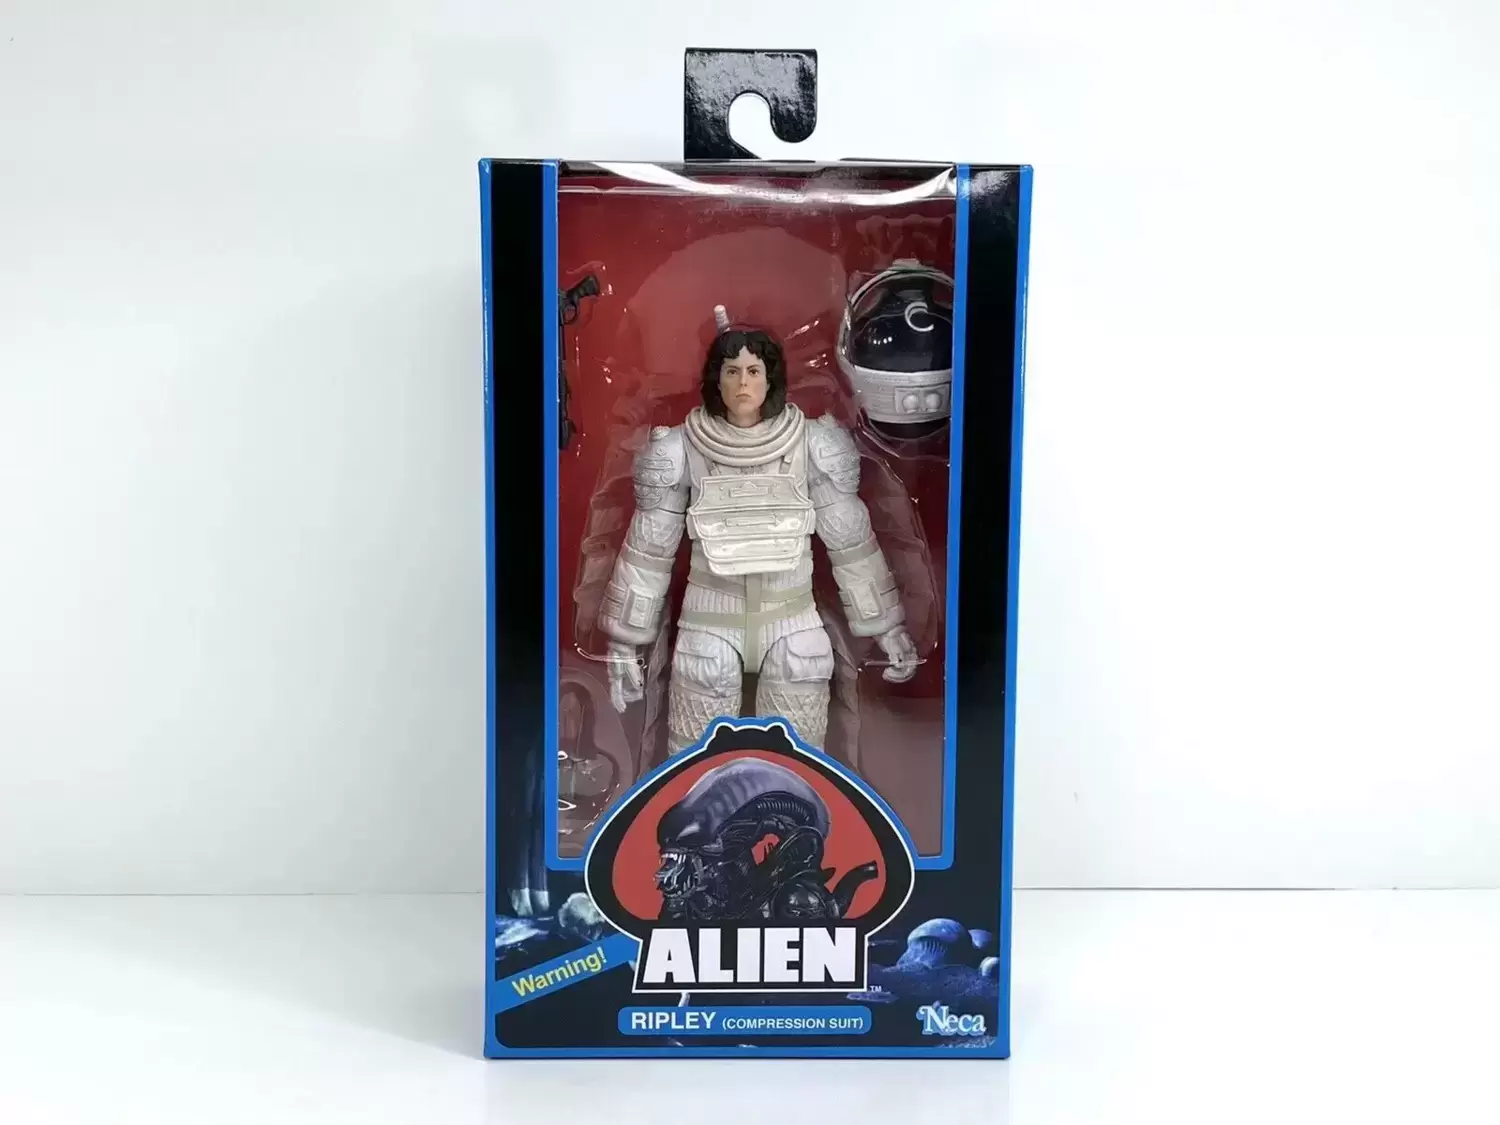 Alien 40th Anniversary - Ripley Compression suit